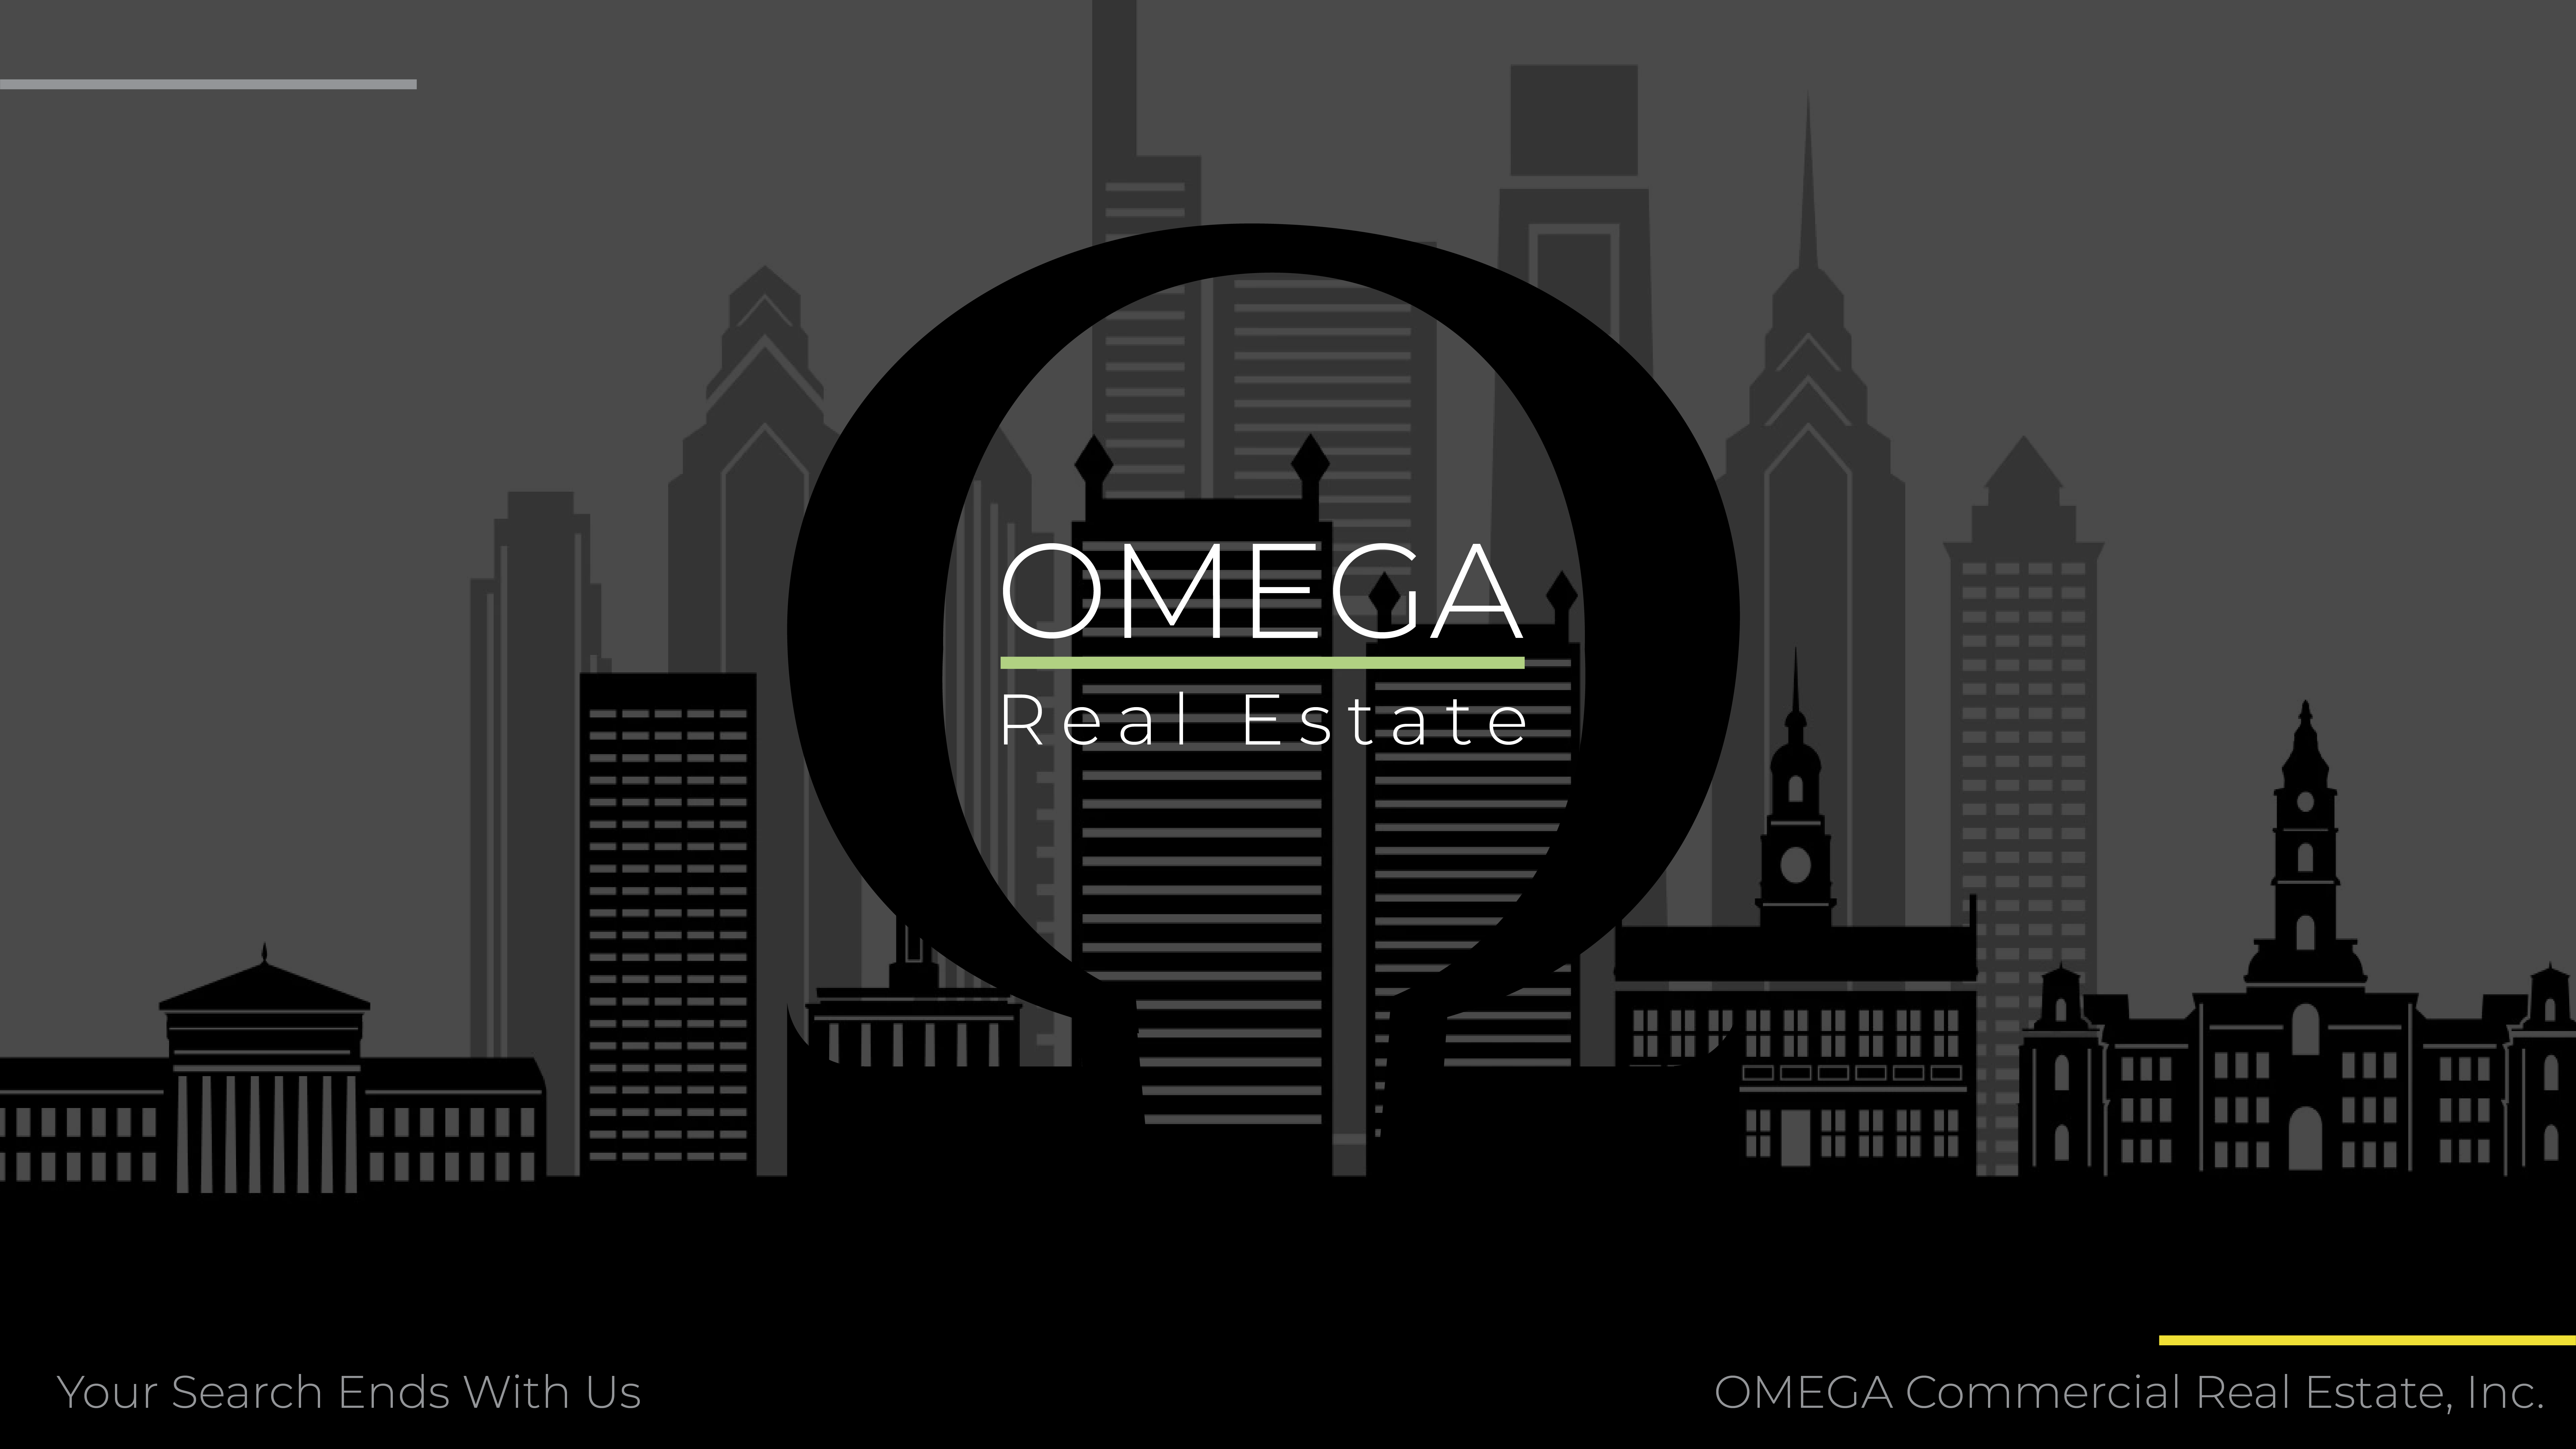 OMEGA Commercial Real Estate Banner, with Philadelphia Skyline and Omega Symbol www.omegare.com